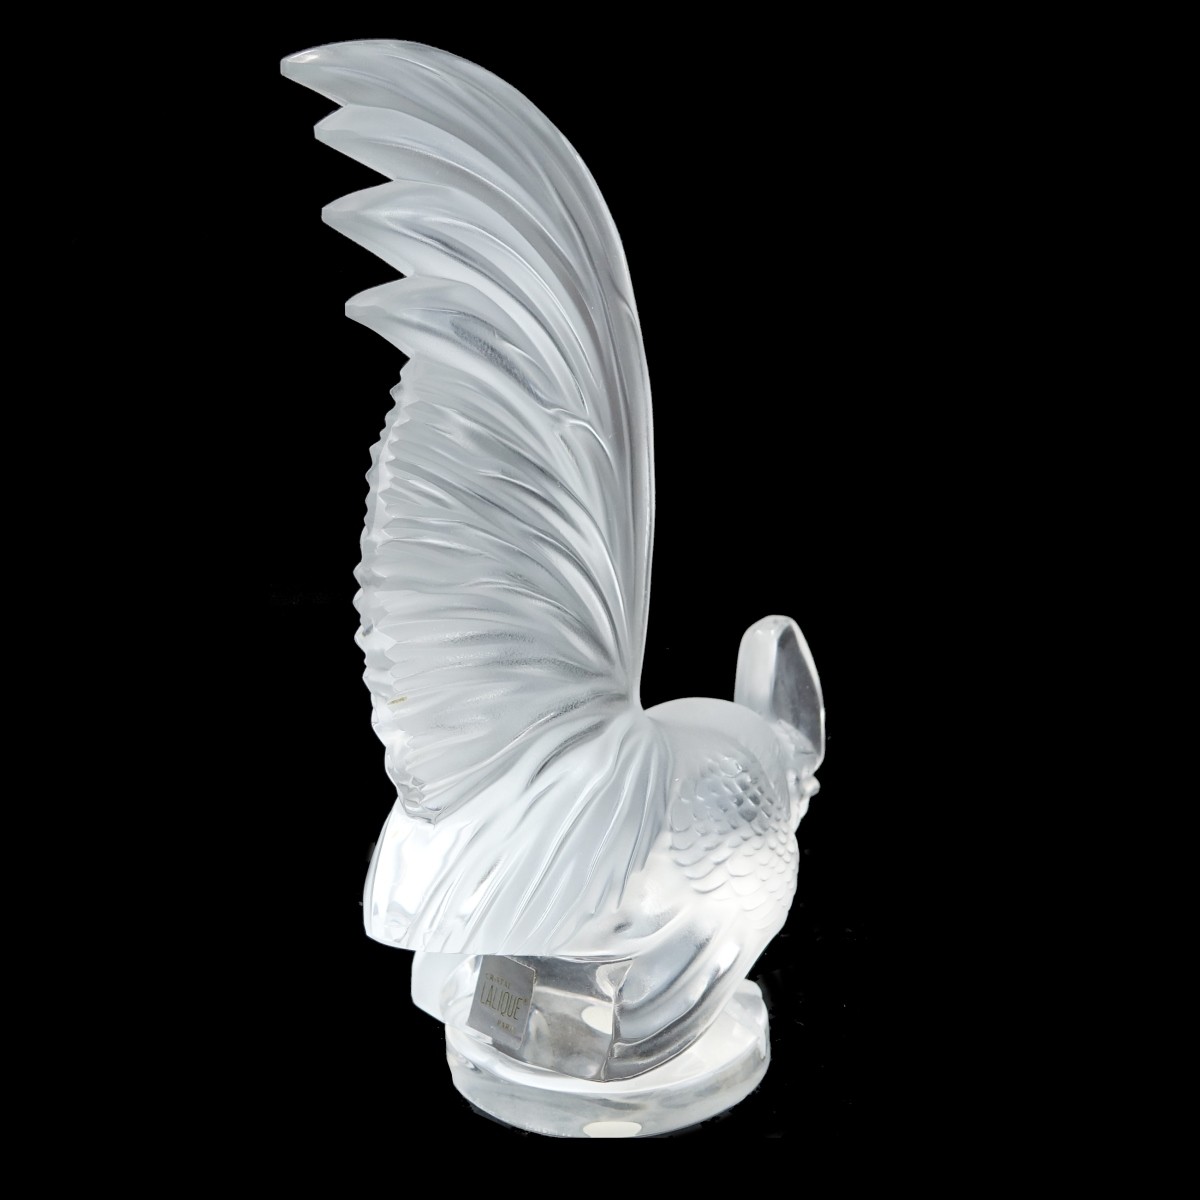 Lalique "Rooster" Car Mascot